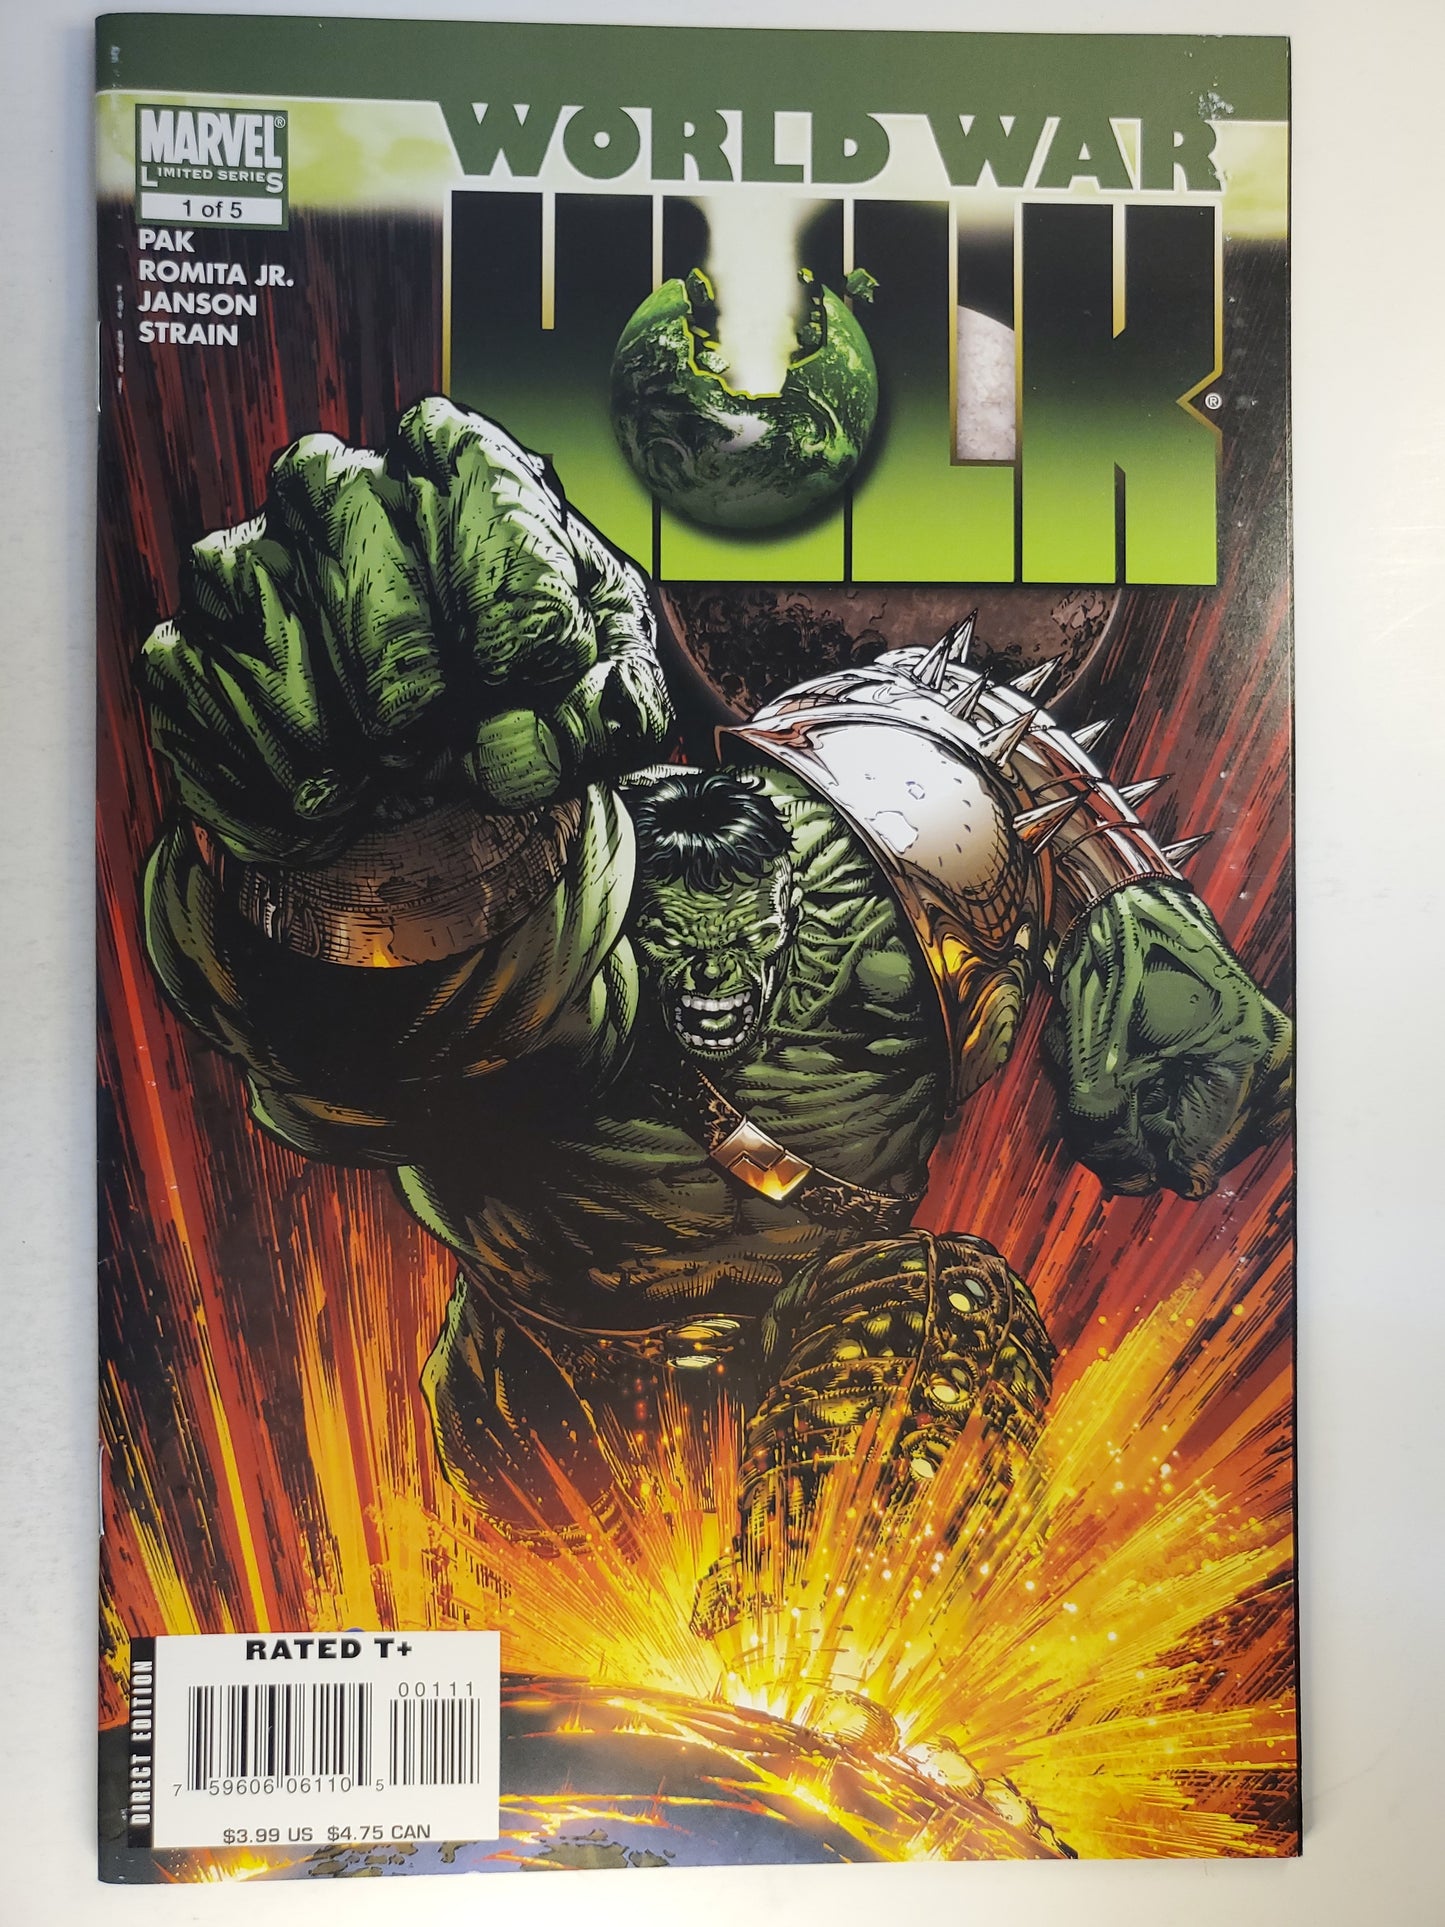 Marvel World War Hulk Vol 1 #1 (of 5) Key (101738)